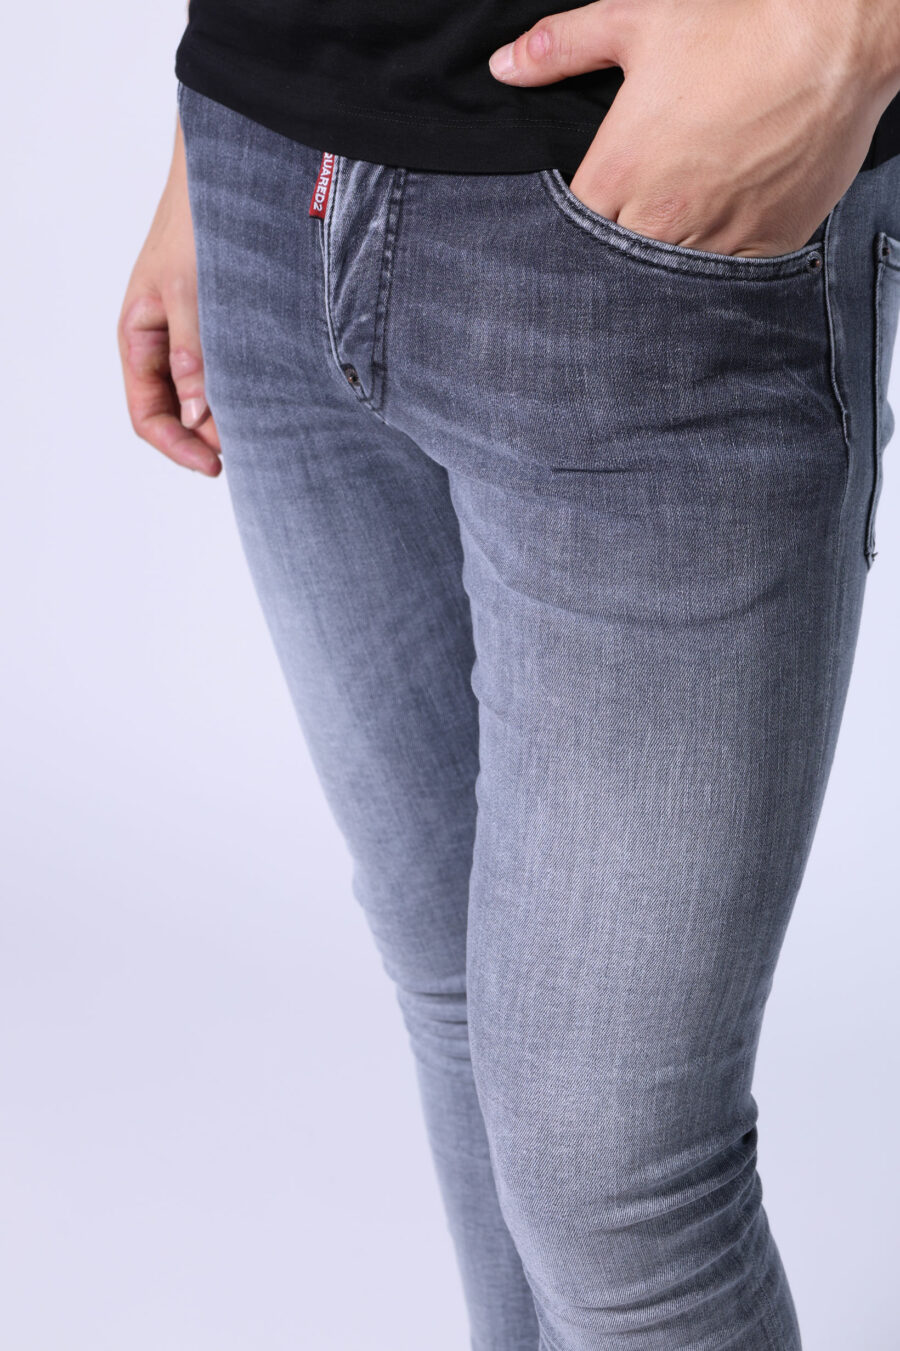 Jeans "skater jean" grau getragen - Ohne Titel Katalog 05641 1